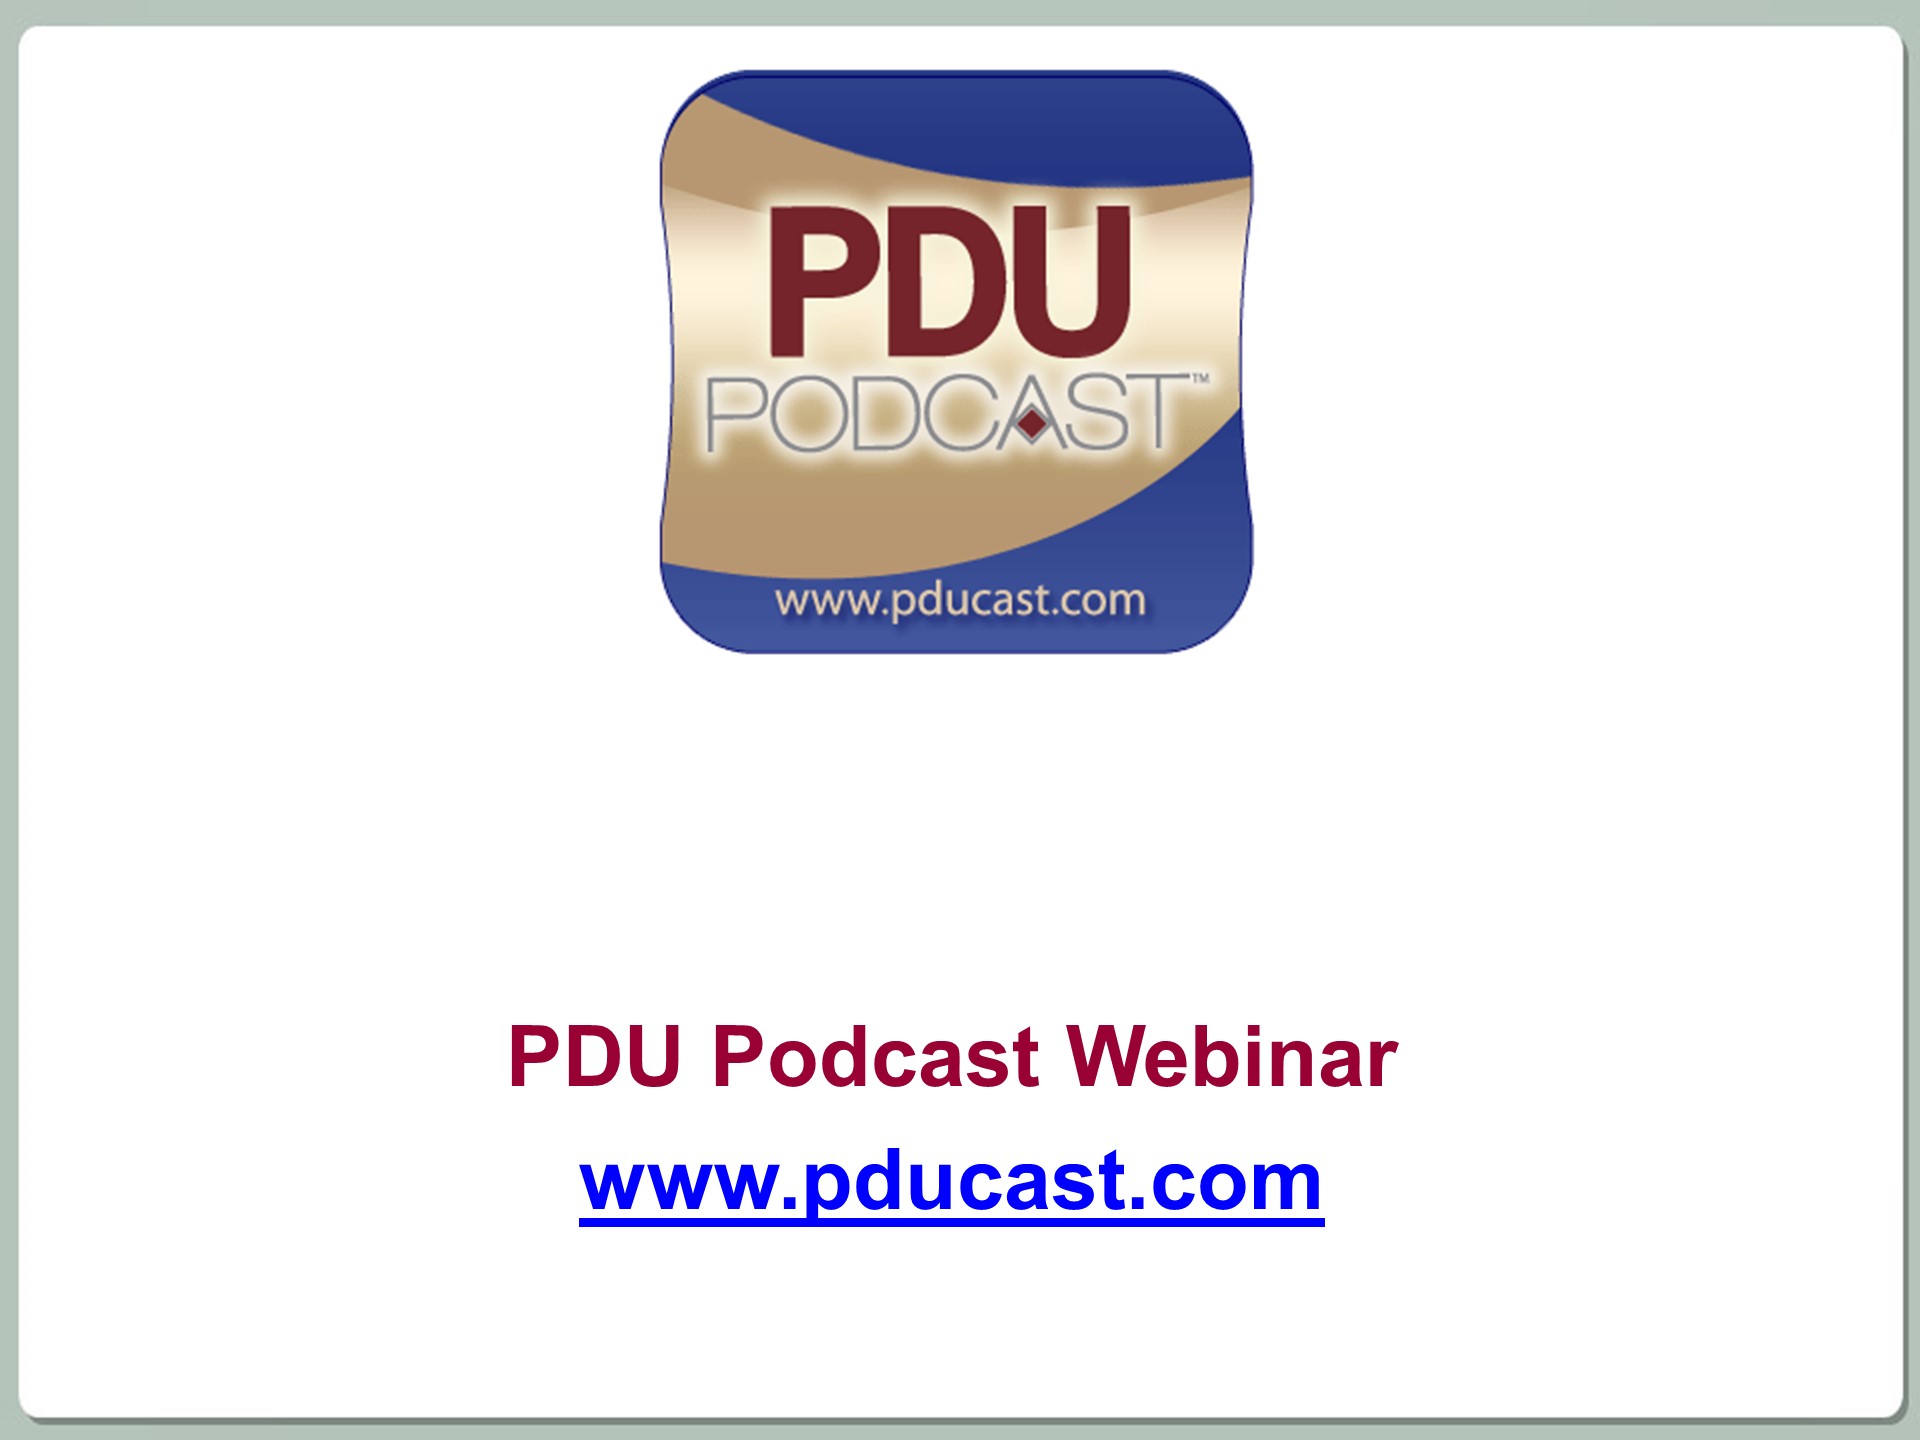 PDU_Podcast_Video_Poster.jpg - 146.32 kB